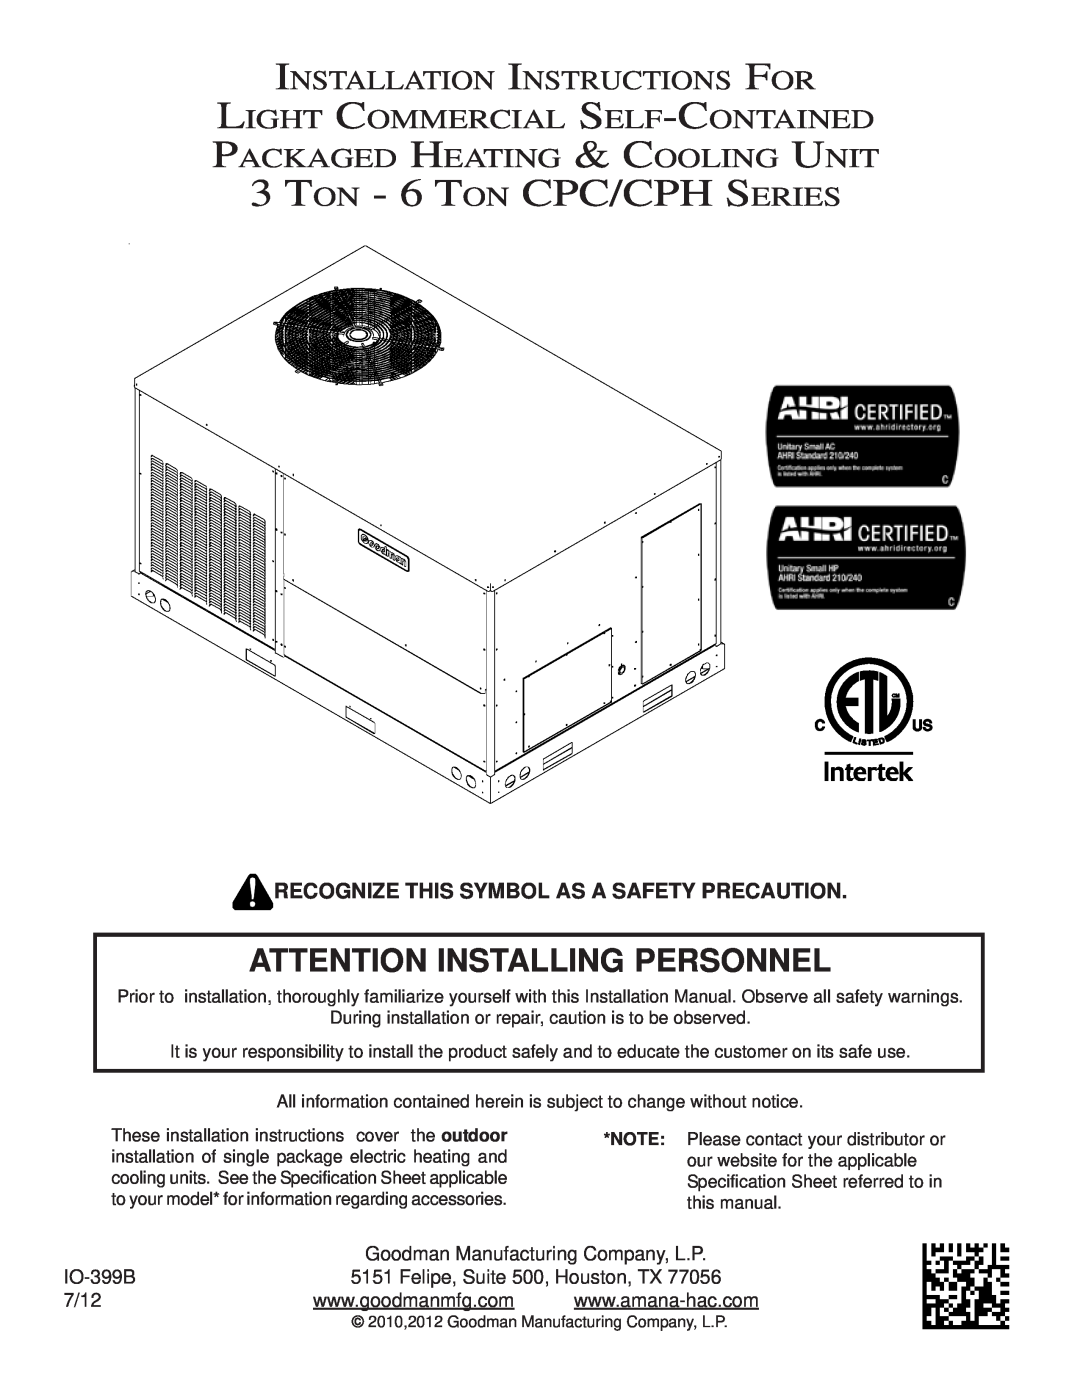 Goodman Mfg 3 Ton- 6 Ton CPC/CPH Series installation instructions TON - 6 TON CPC/CPH SERIES, IO-399B, 7/12 